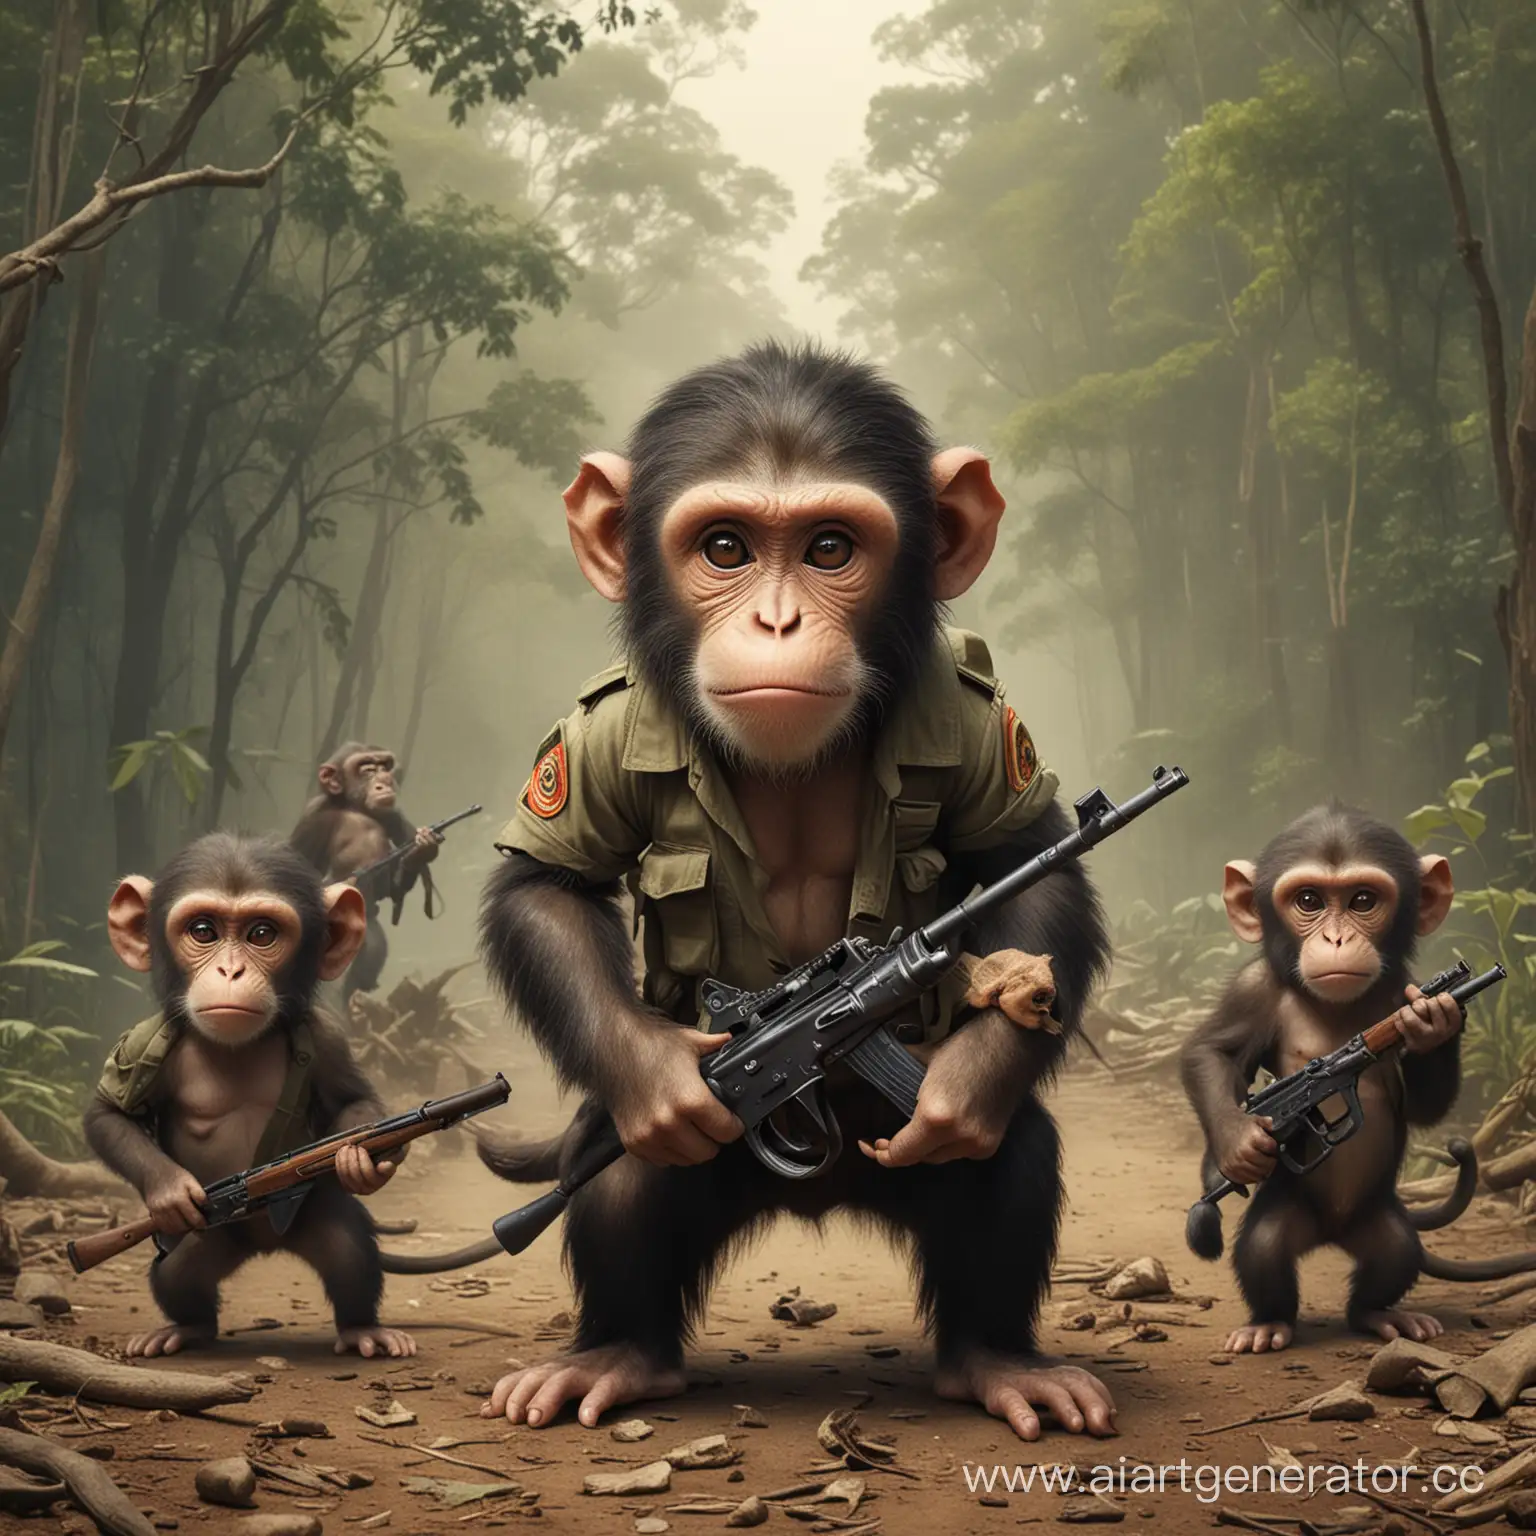 Monkeys in the style of Rambo films